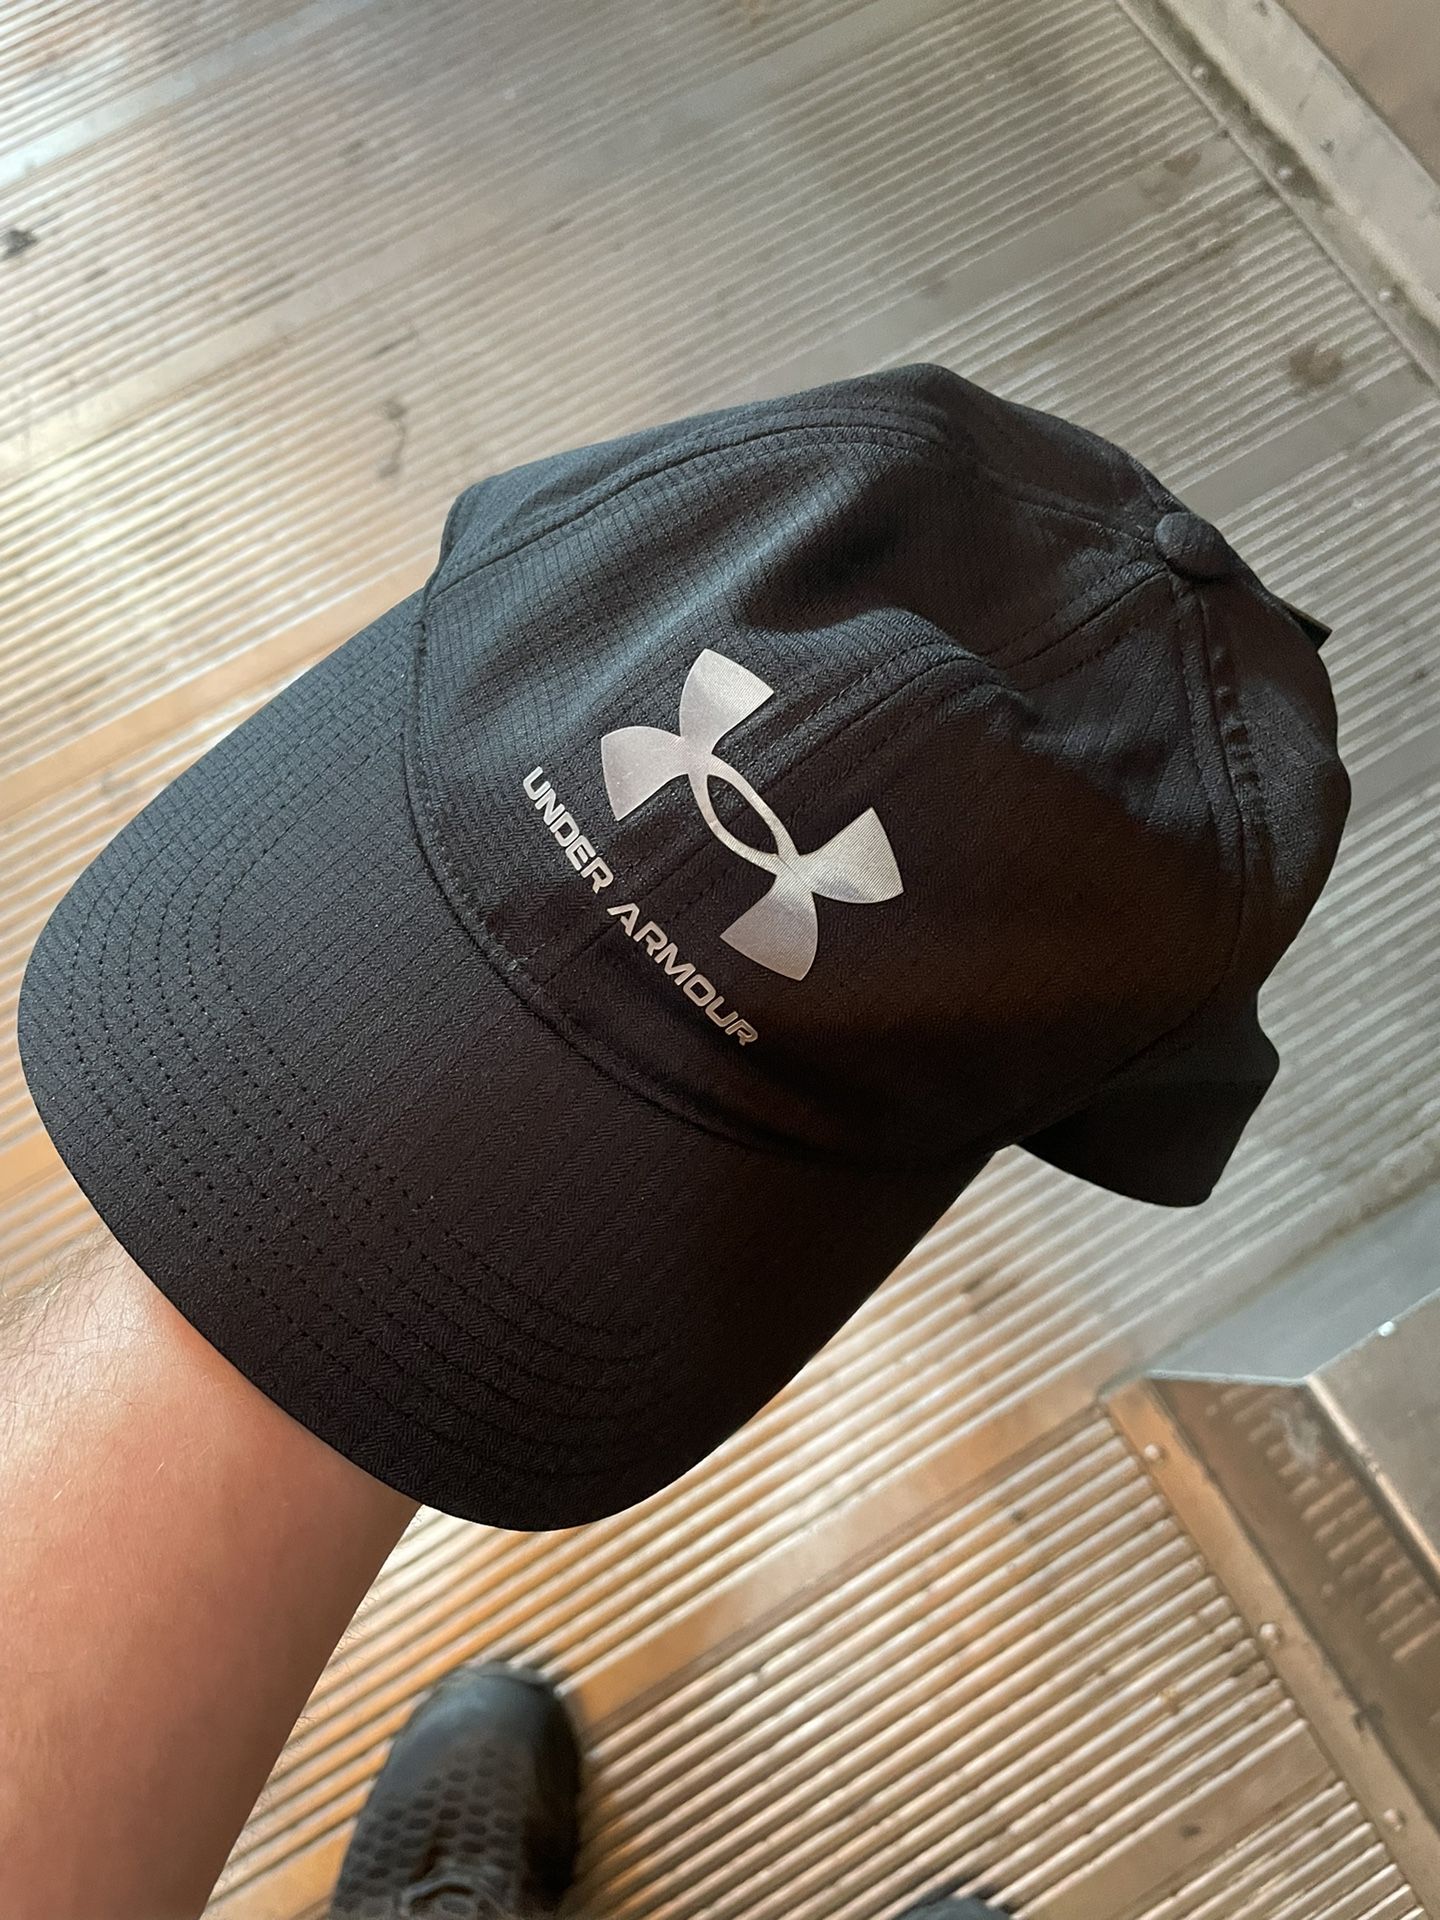 Brand NEW Under Armor Hat